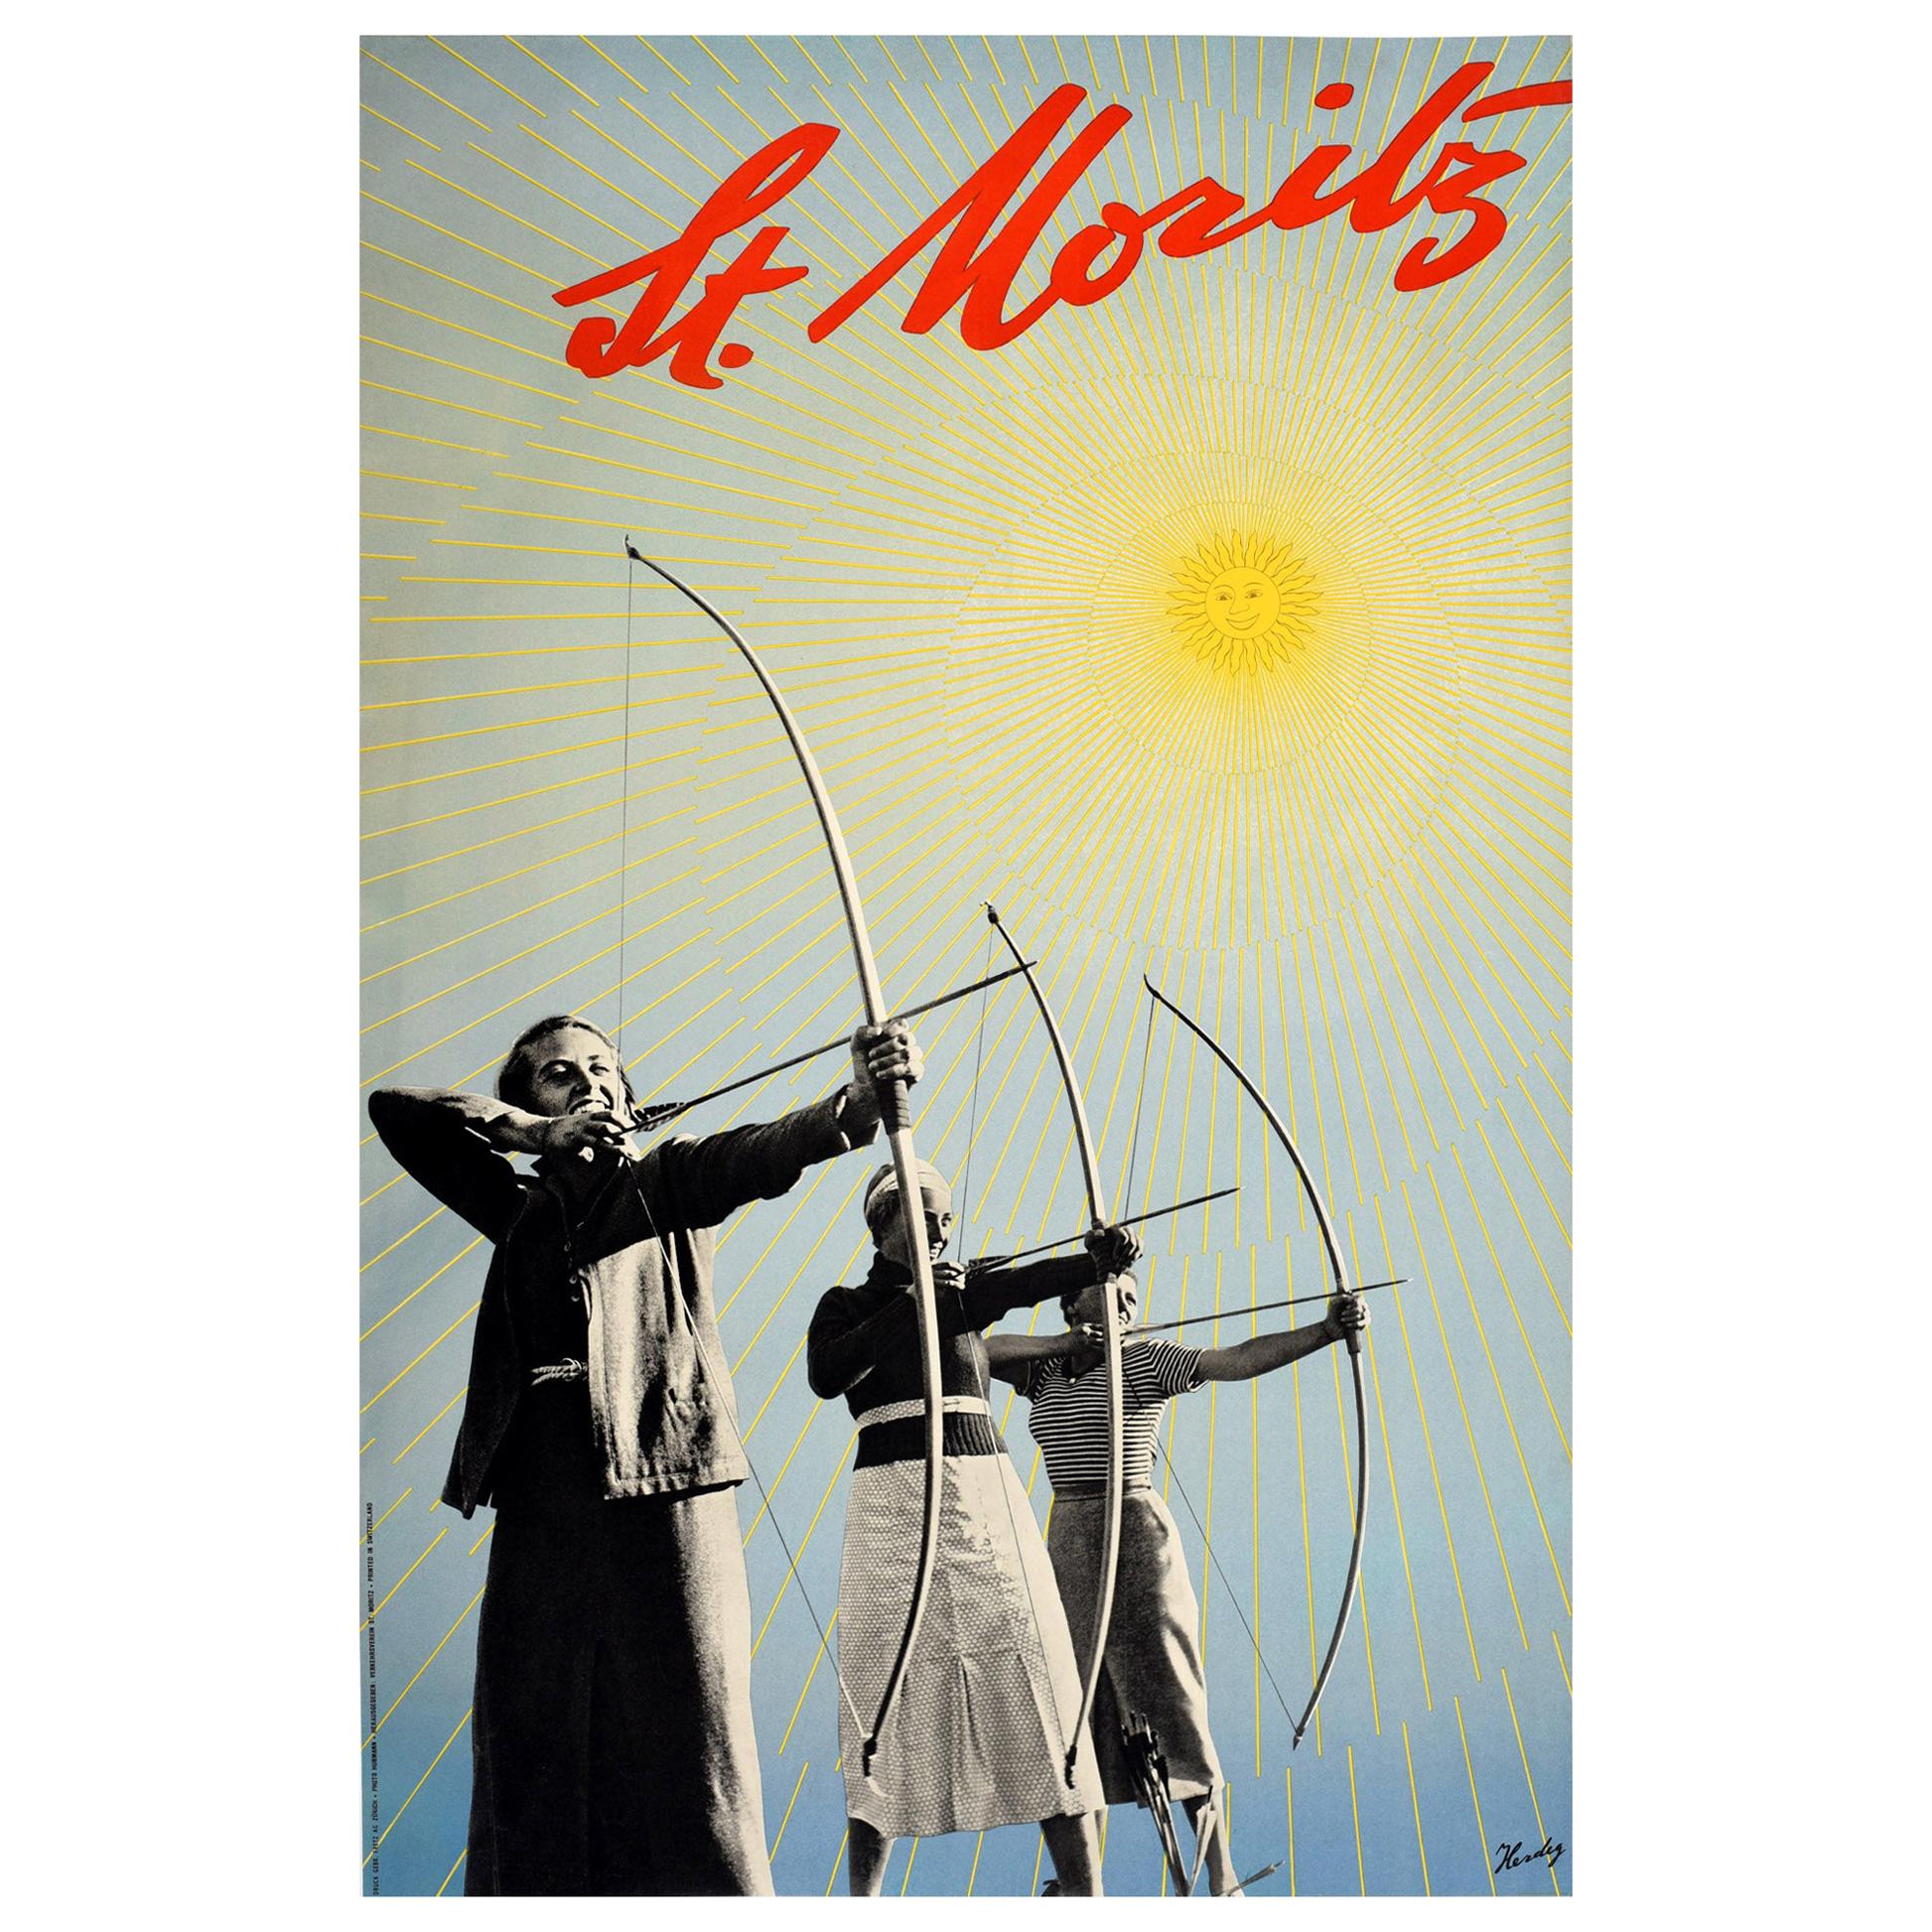 Original Vintage Poster St Moritz Swiss Alps Winter Sport Archery Travel Design